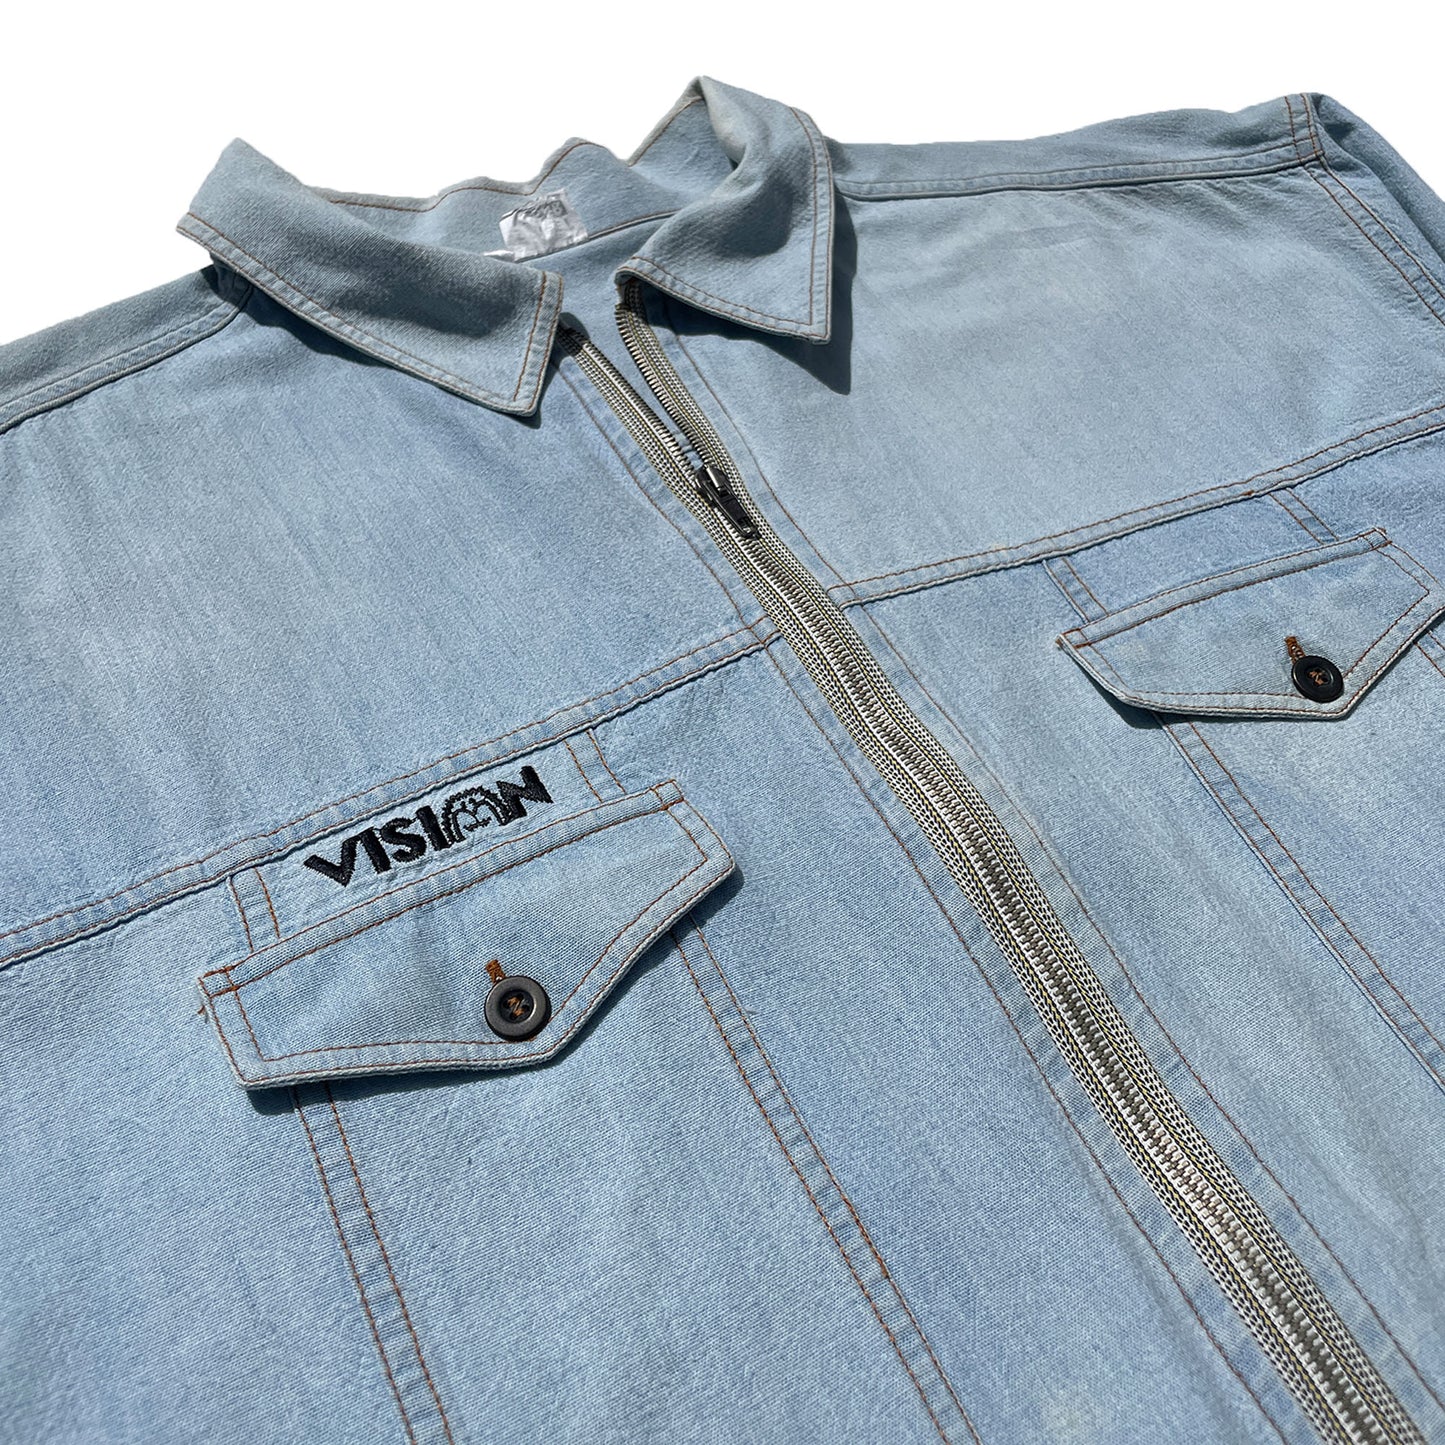 Vision Street Wear Zip-up Denim Jacket VINTAGE 90s